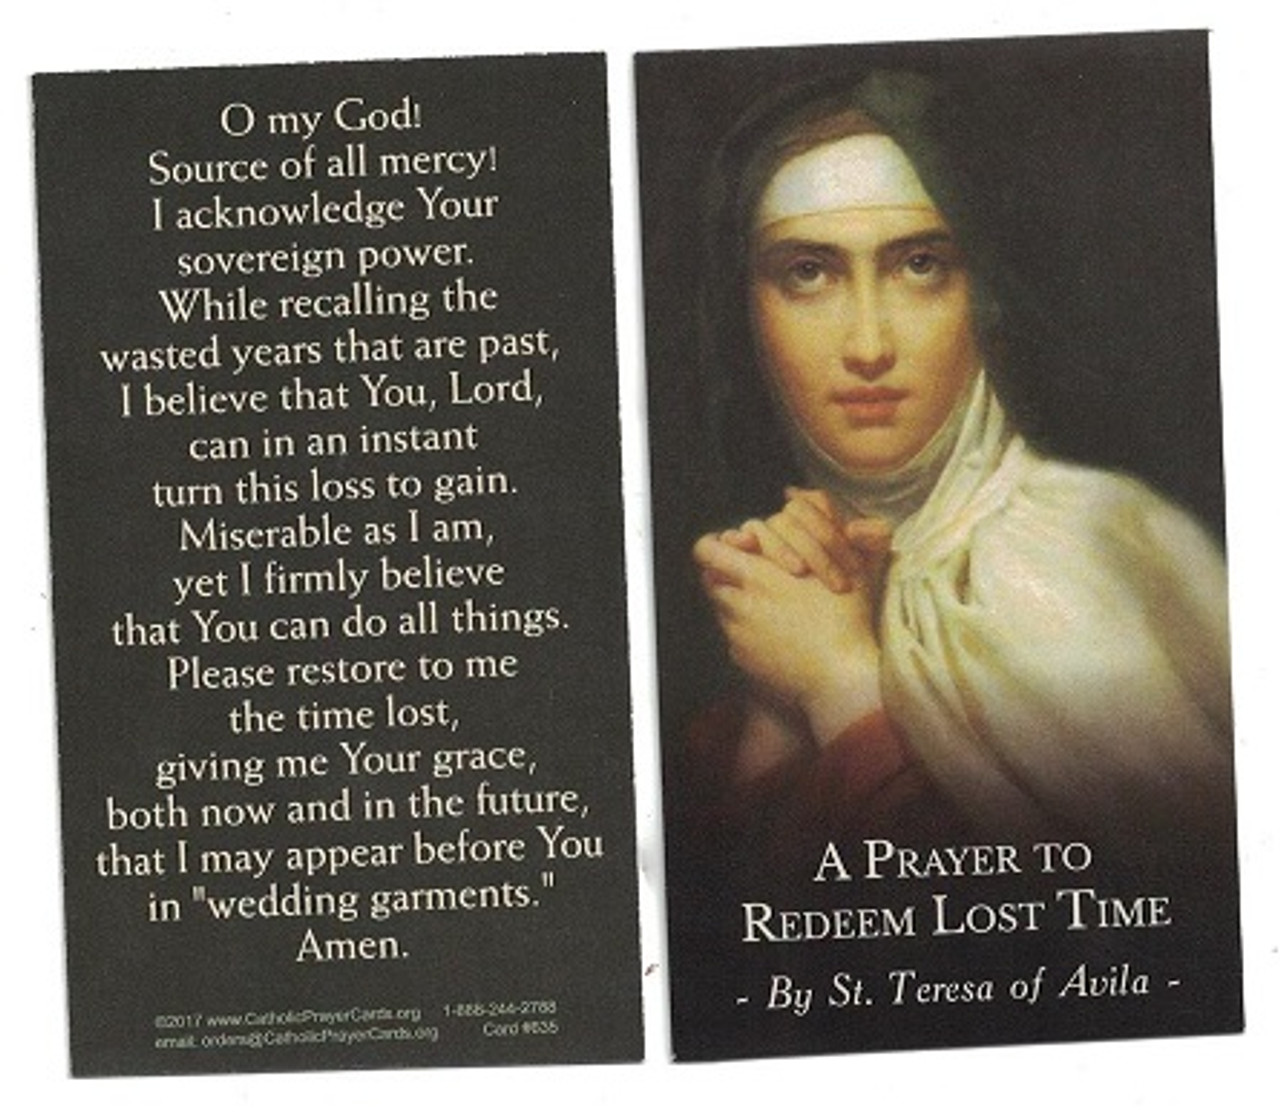 St. Teresa of Avila Prayer to Redeem Lost Time